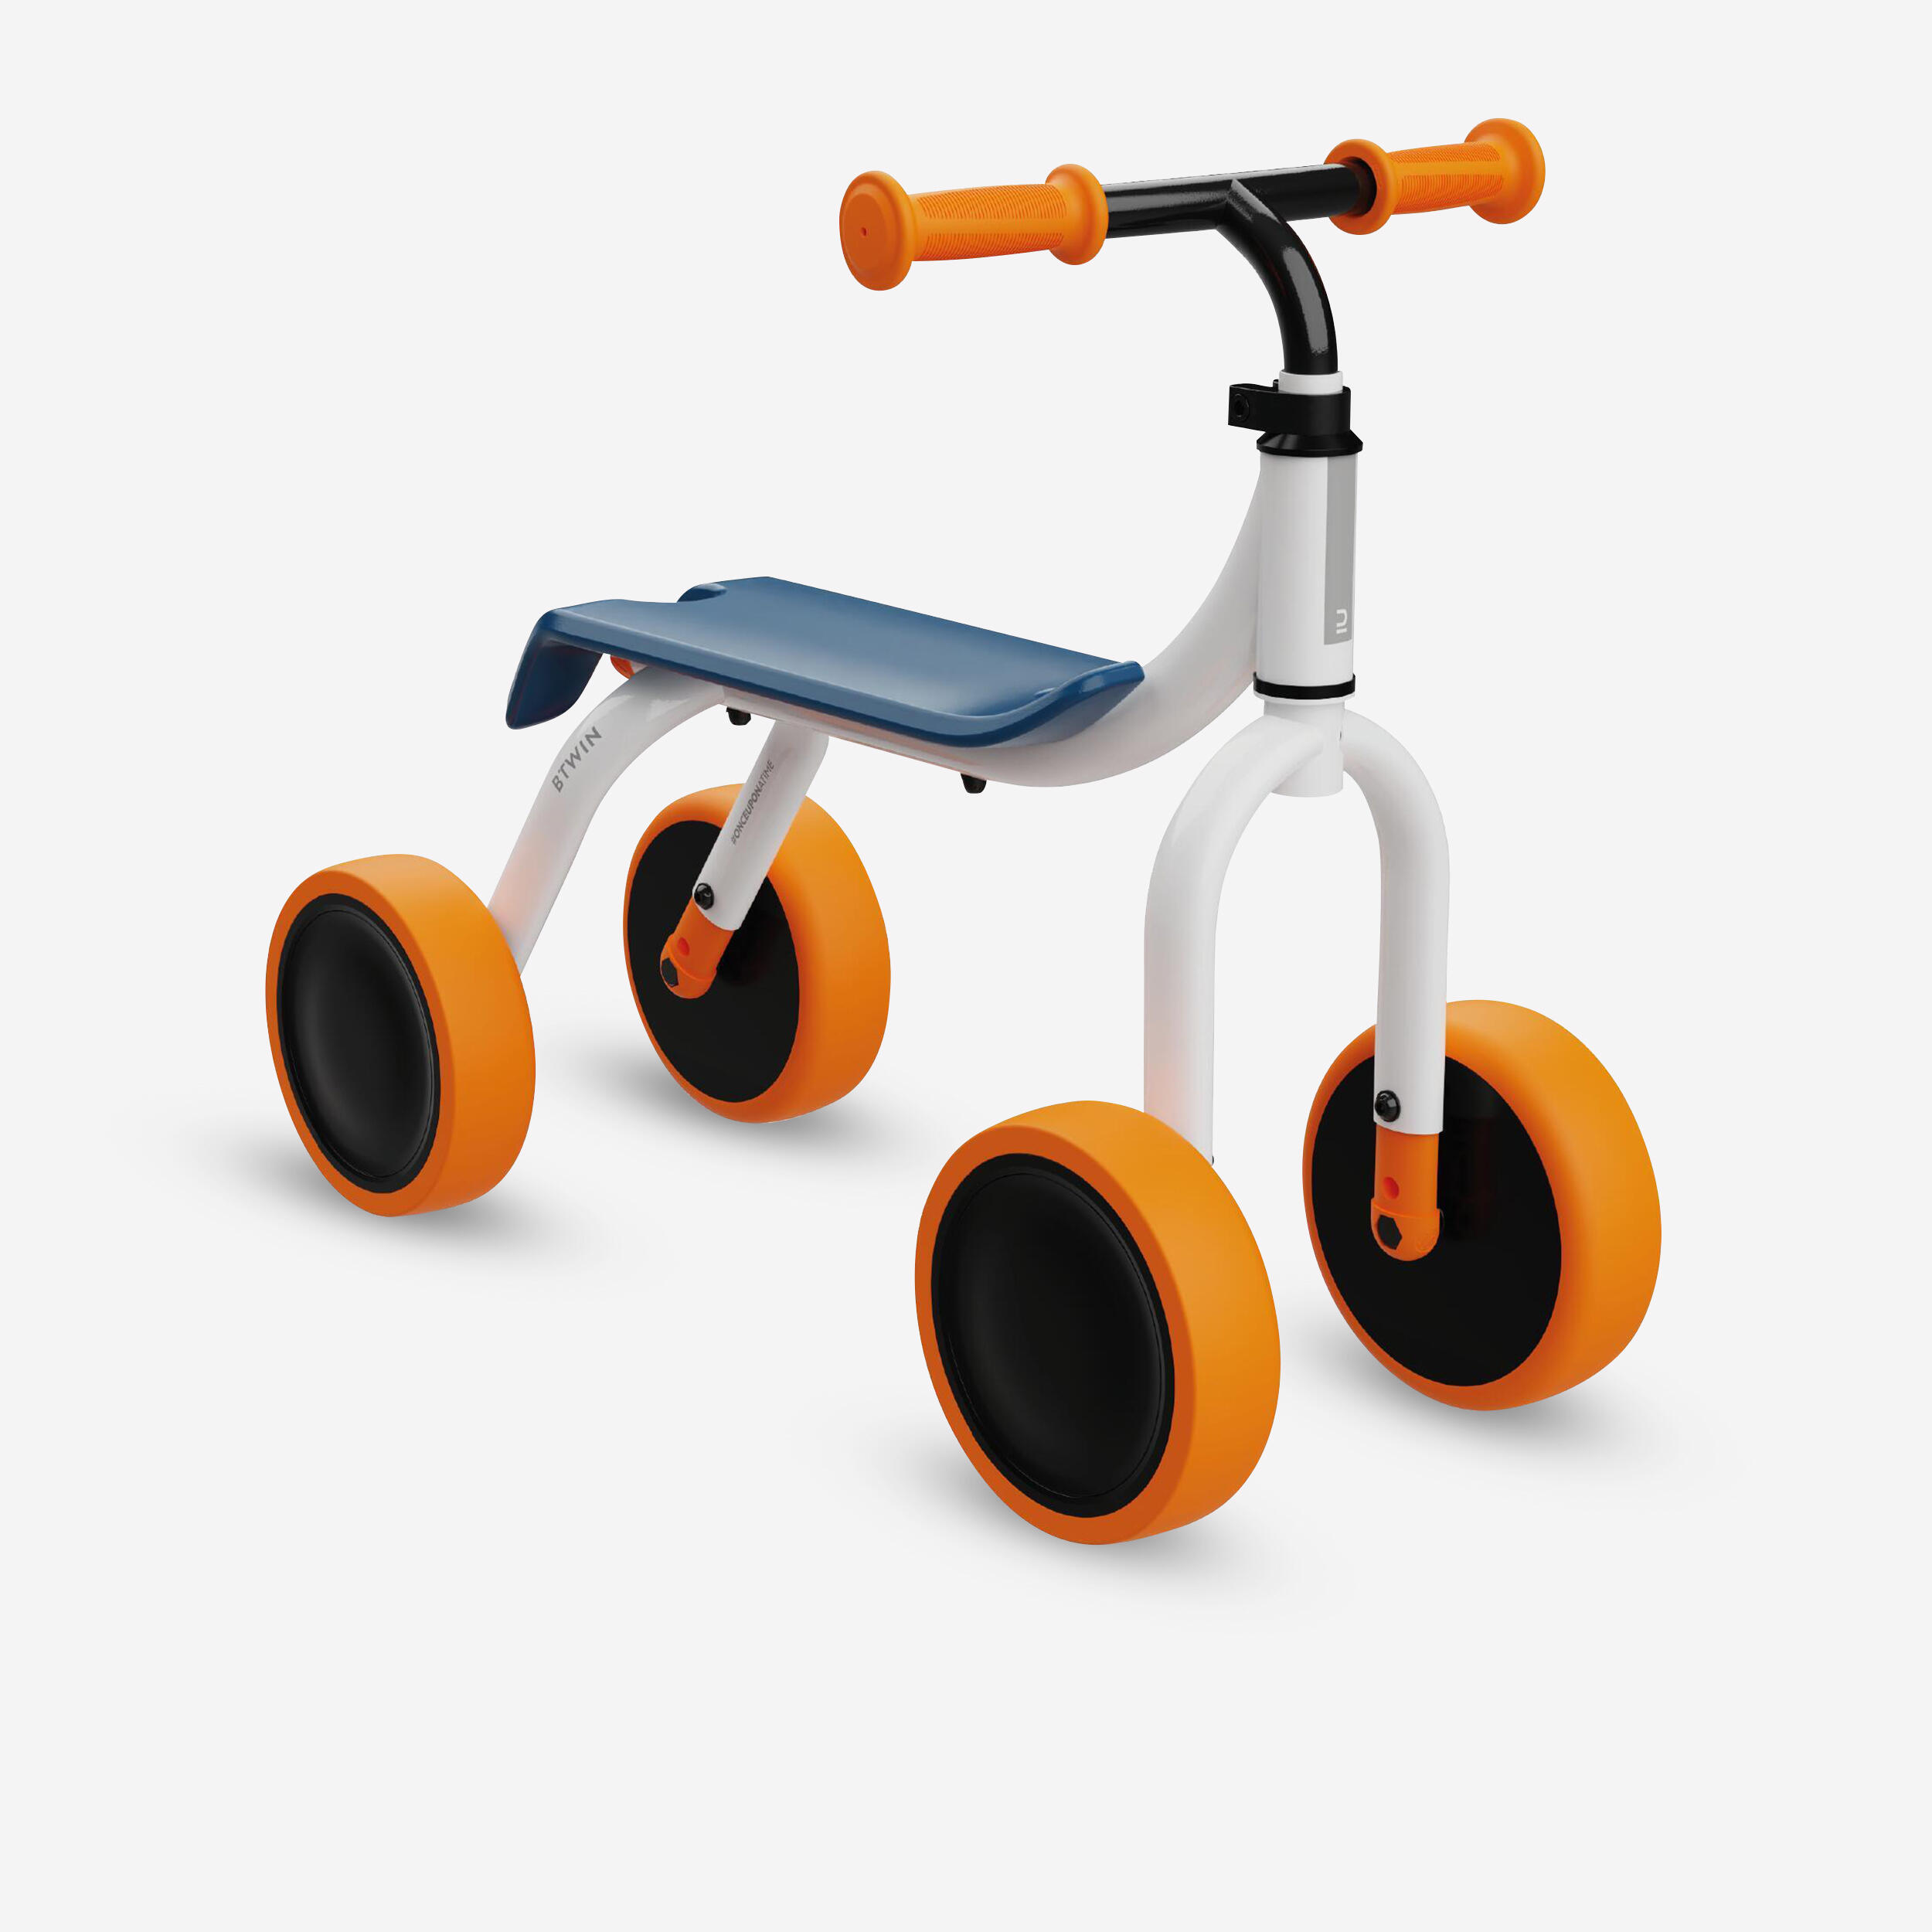 Convertible 2-in-1 Ride-On to Balance Bike - White/Orange 1/15